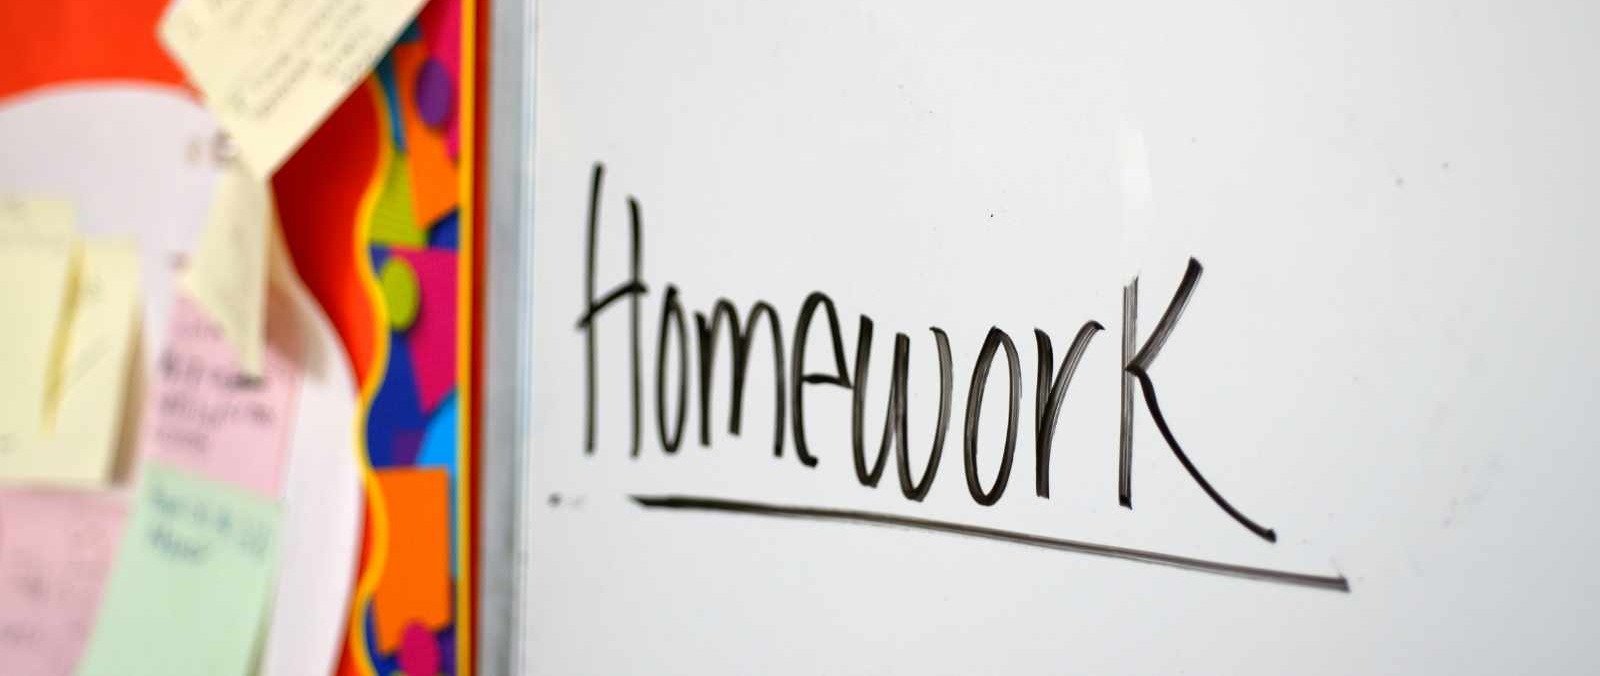 Homework written on white board